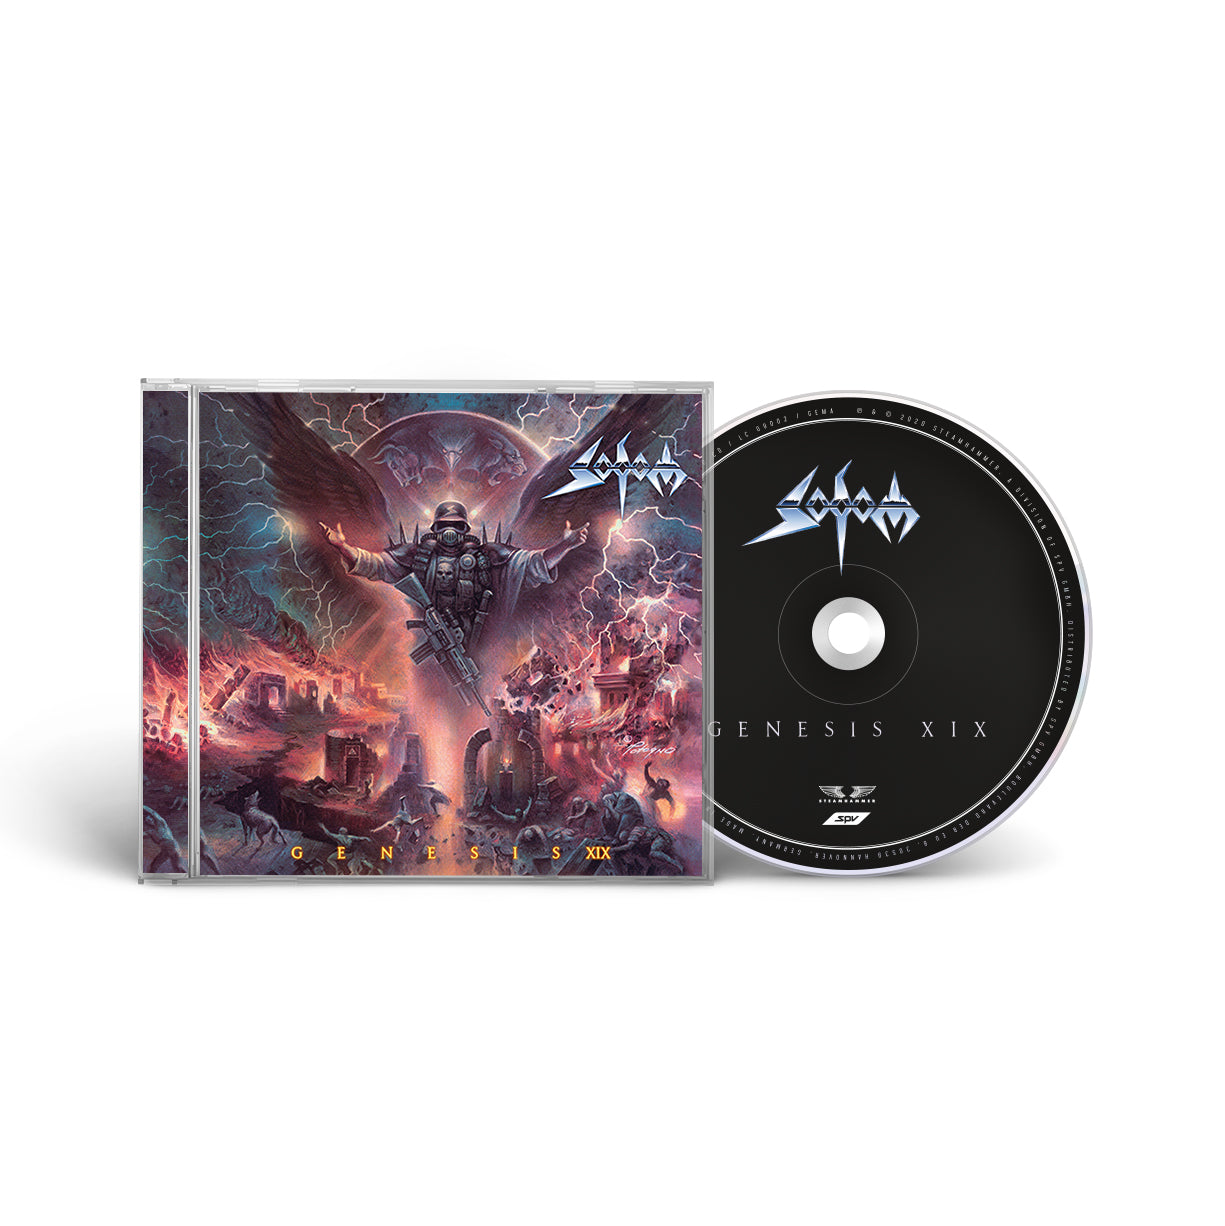 Sodom "Genesis XIX" CD (jewel case)